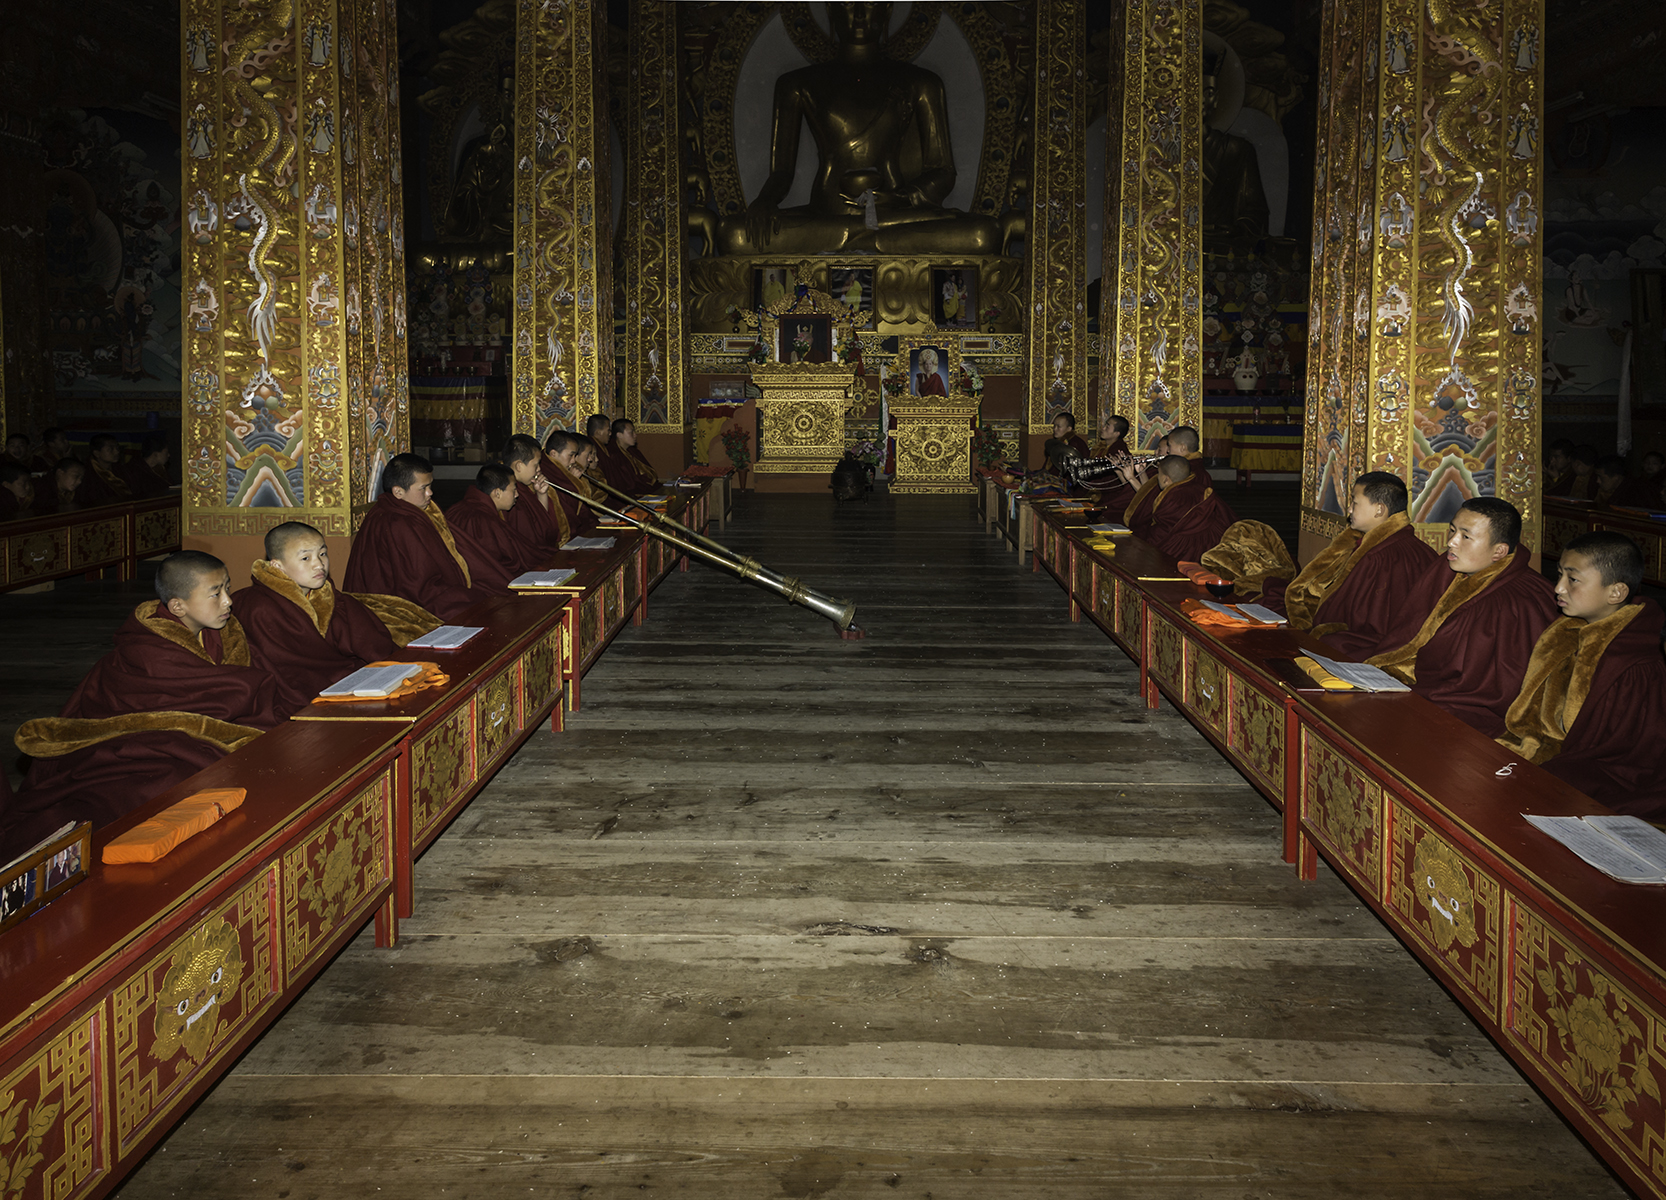 Preghiere al Karma Thegsum Dhechenling Monastery in Khaling